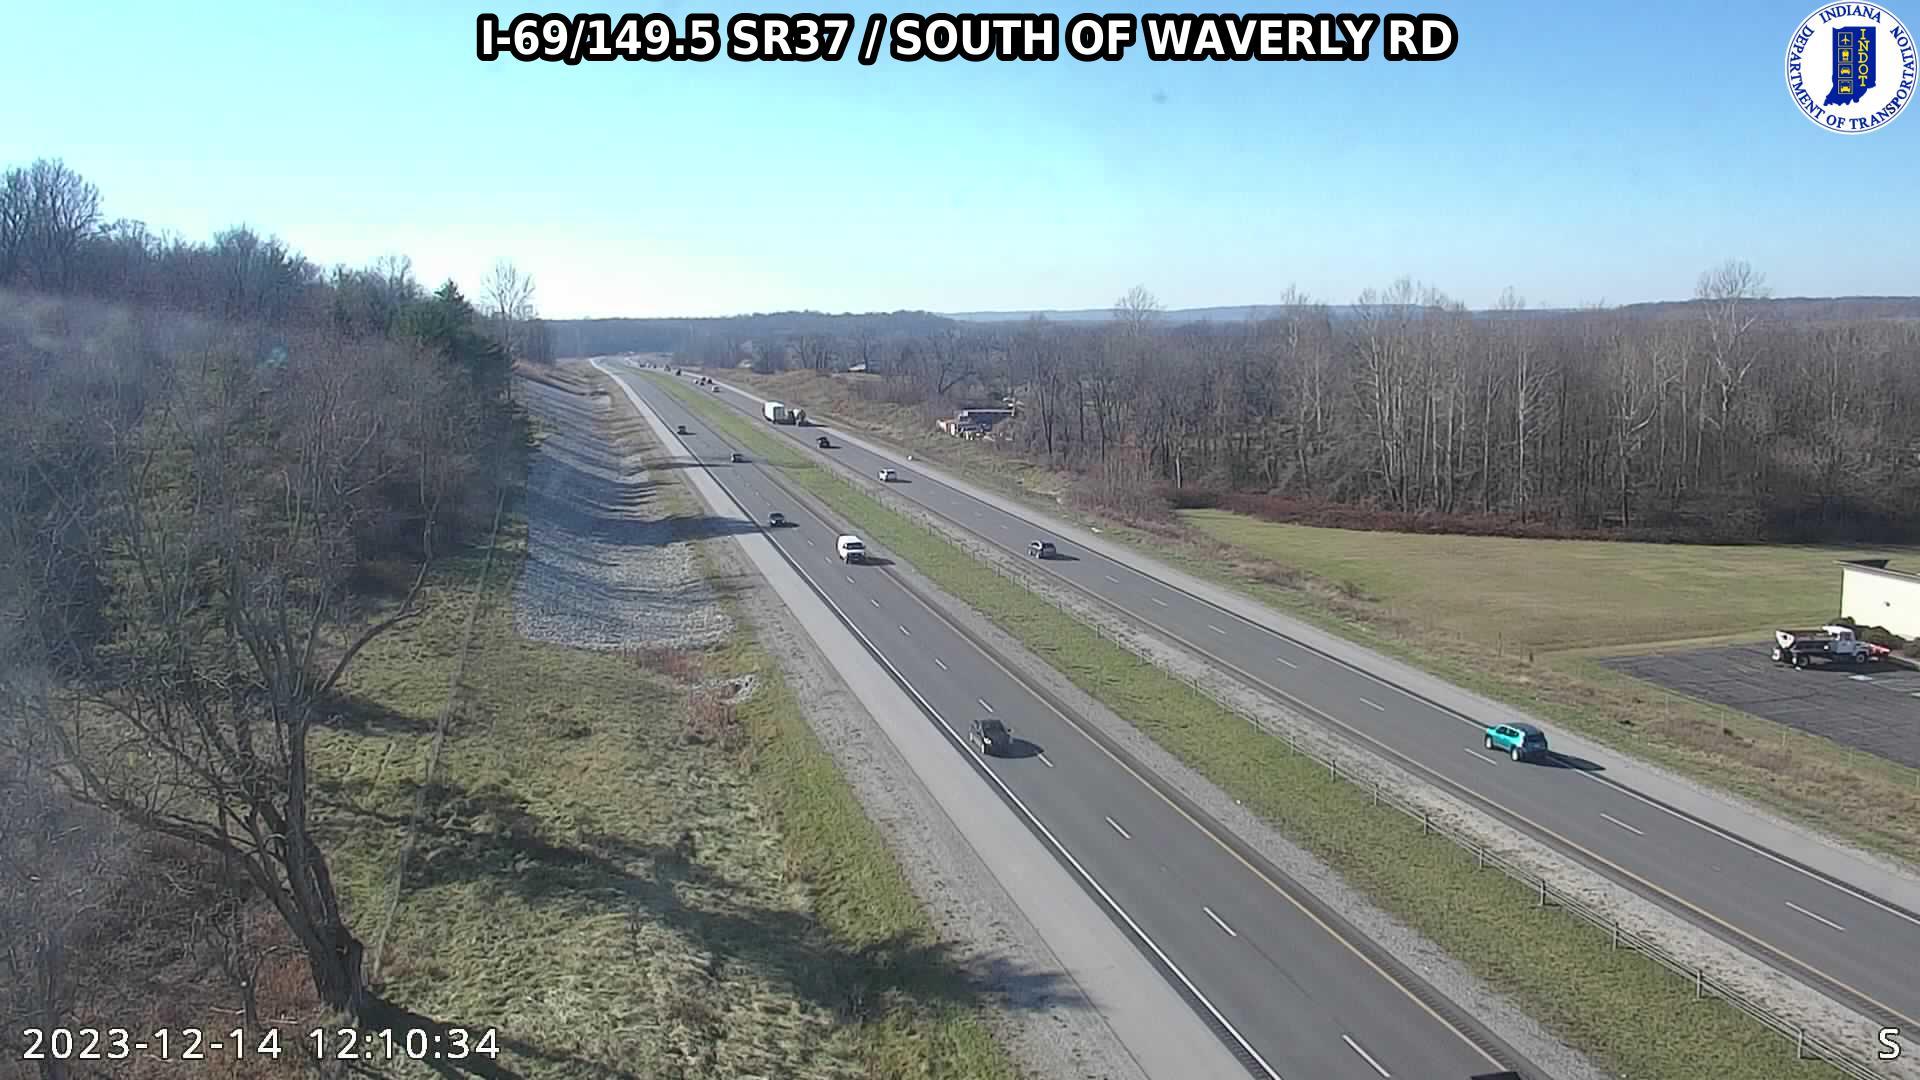 Traffic Cam Waverly Woods: I-69: I-69/149.5 SR37 - SOUTH OF WAVERLY RD: I-69/149.5 SR37 - SOUTH OF WAVERLY RD Player